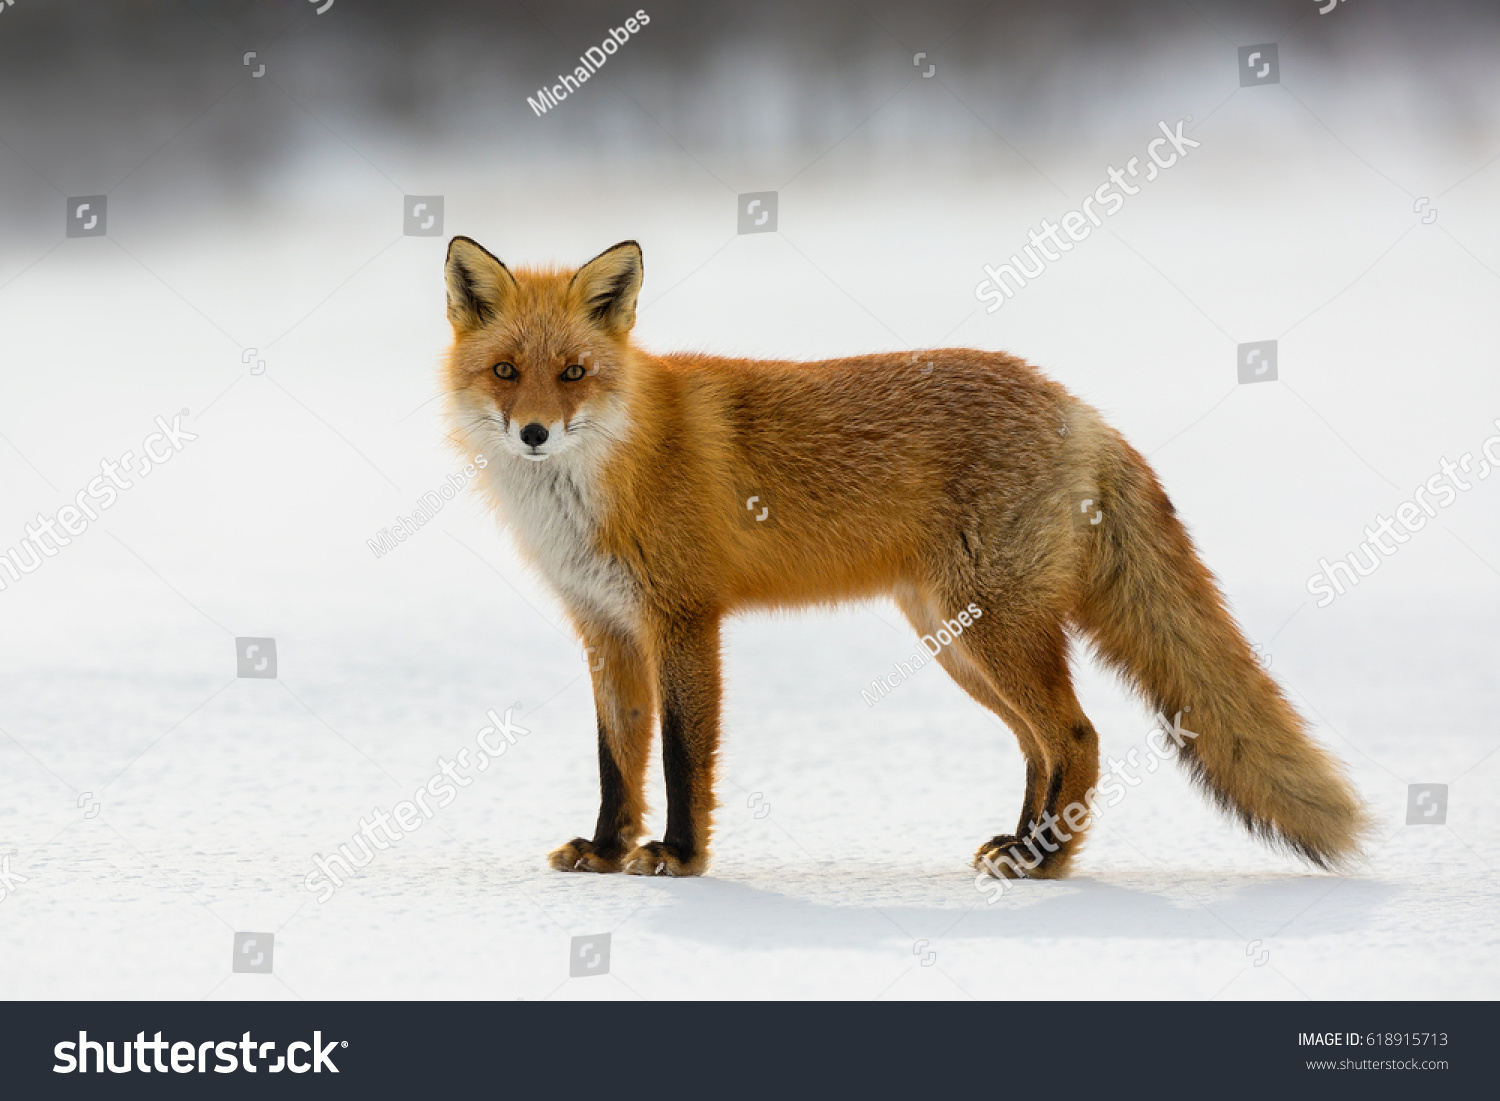 Red fox in winter, Japan. #618915713